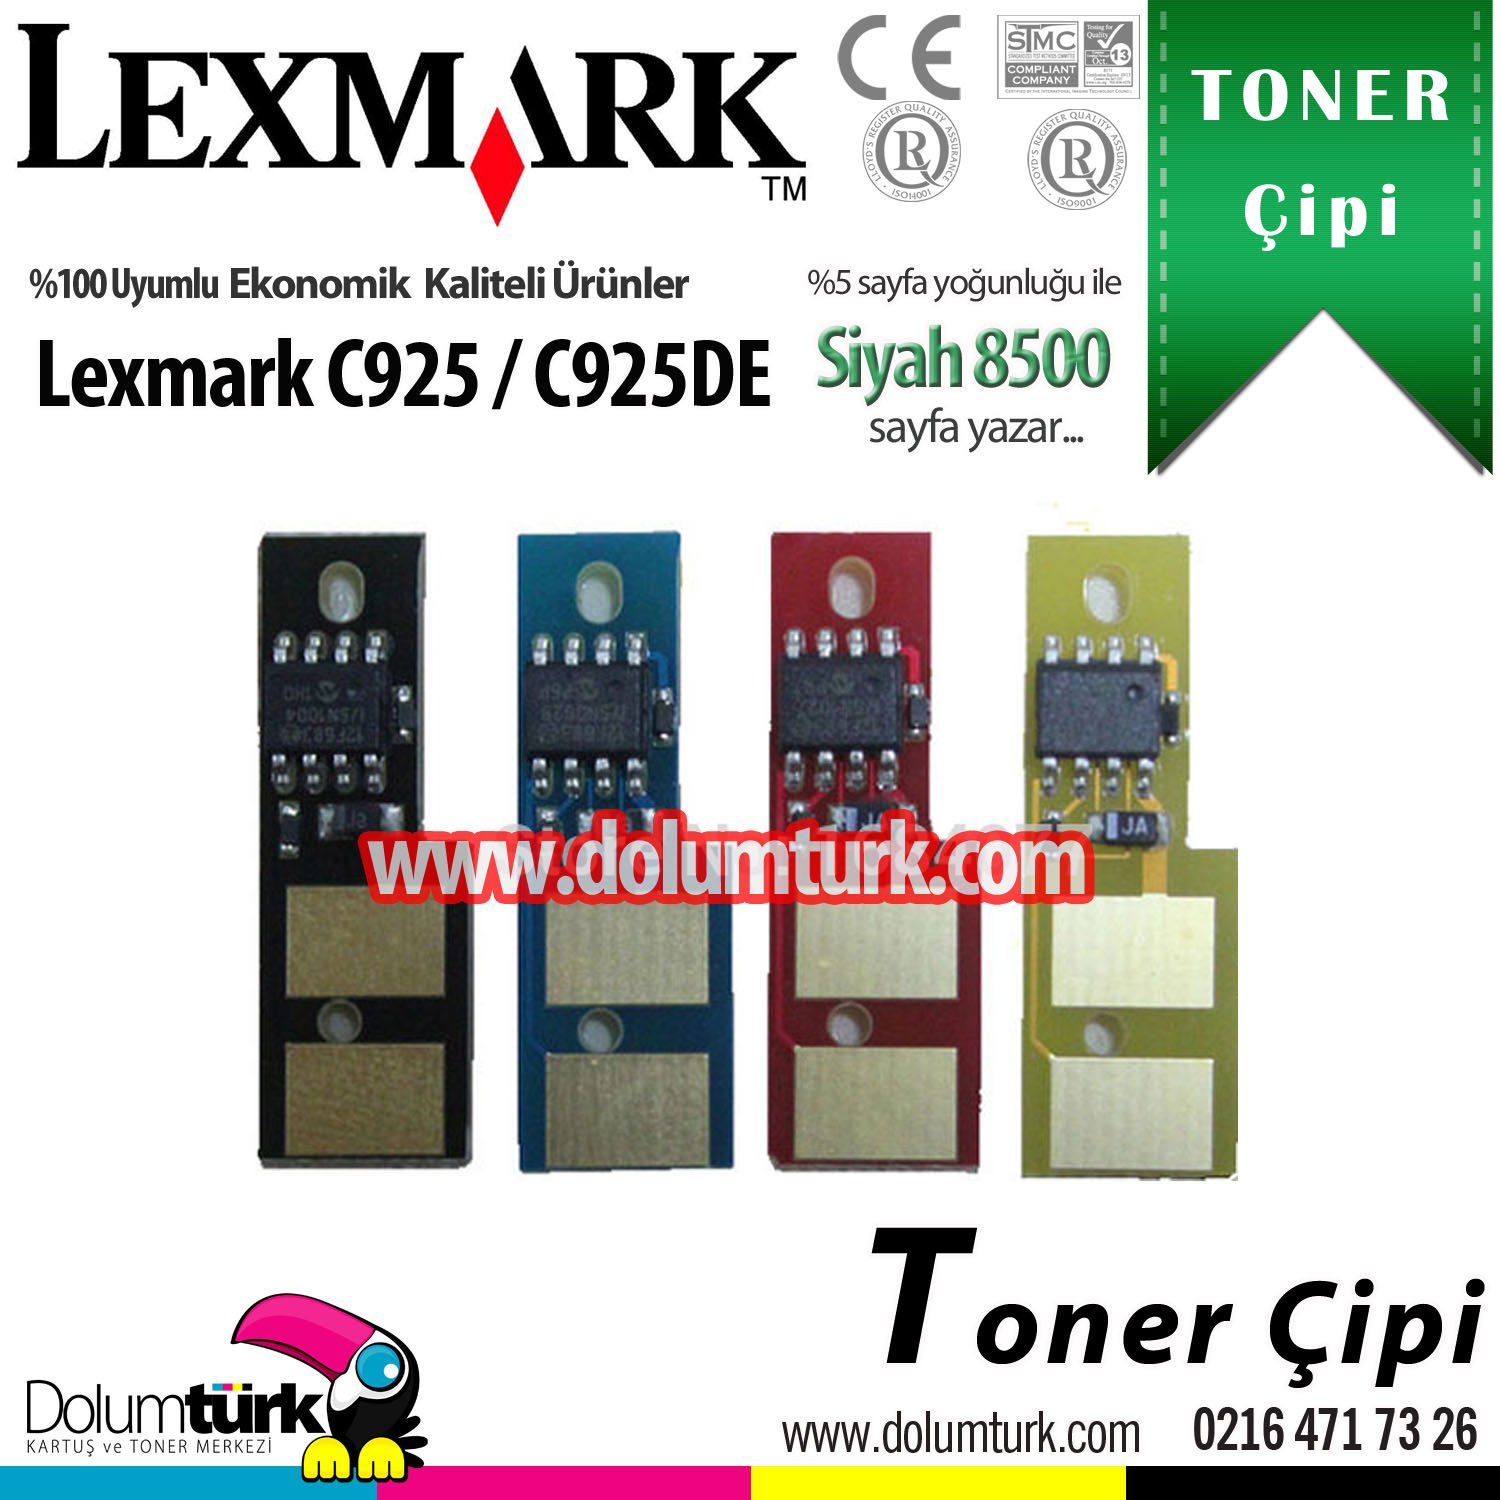 Lexmark C925 / C925DE /C925DTE Toner Çipi